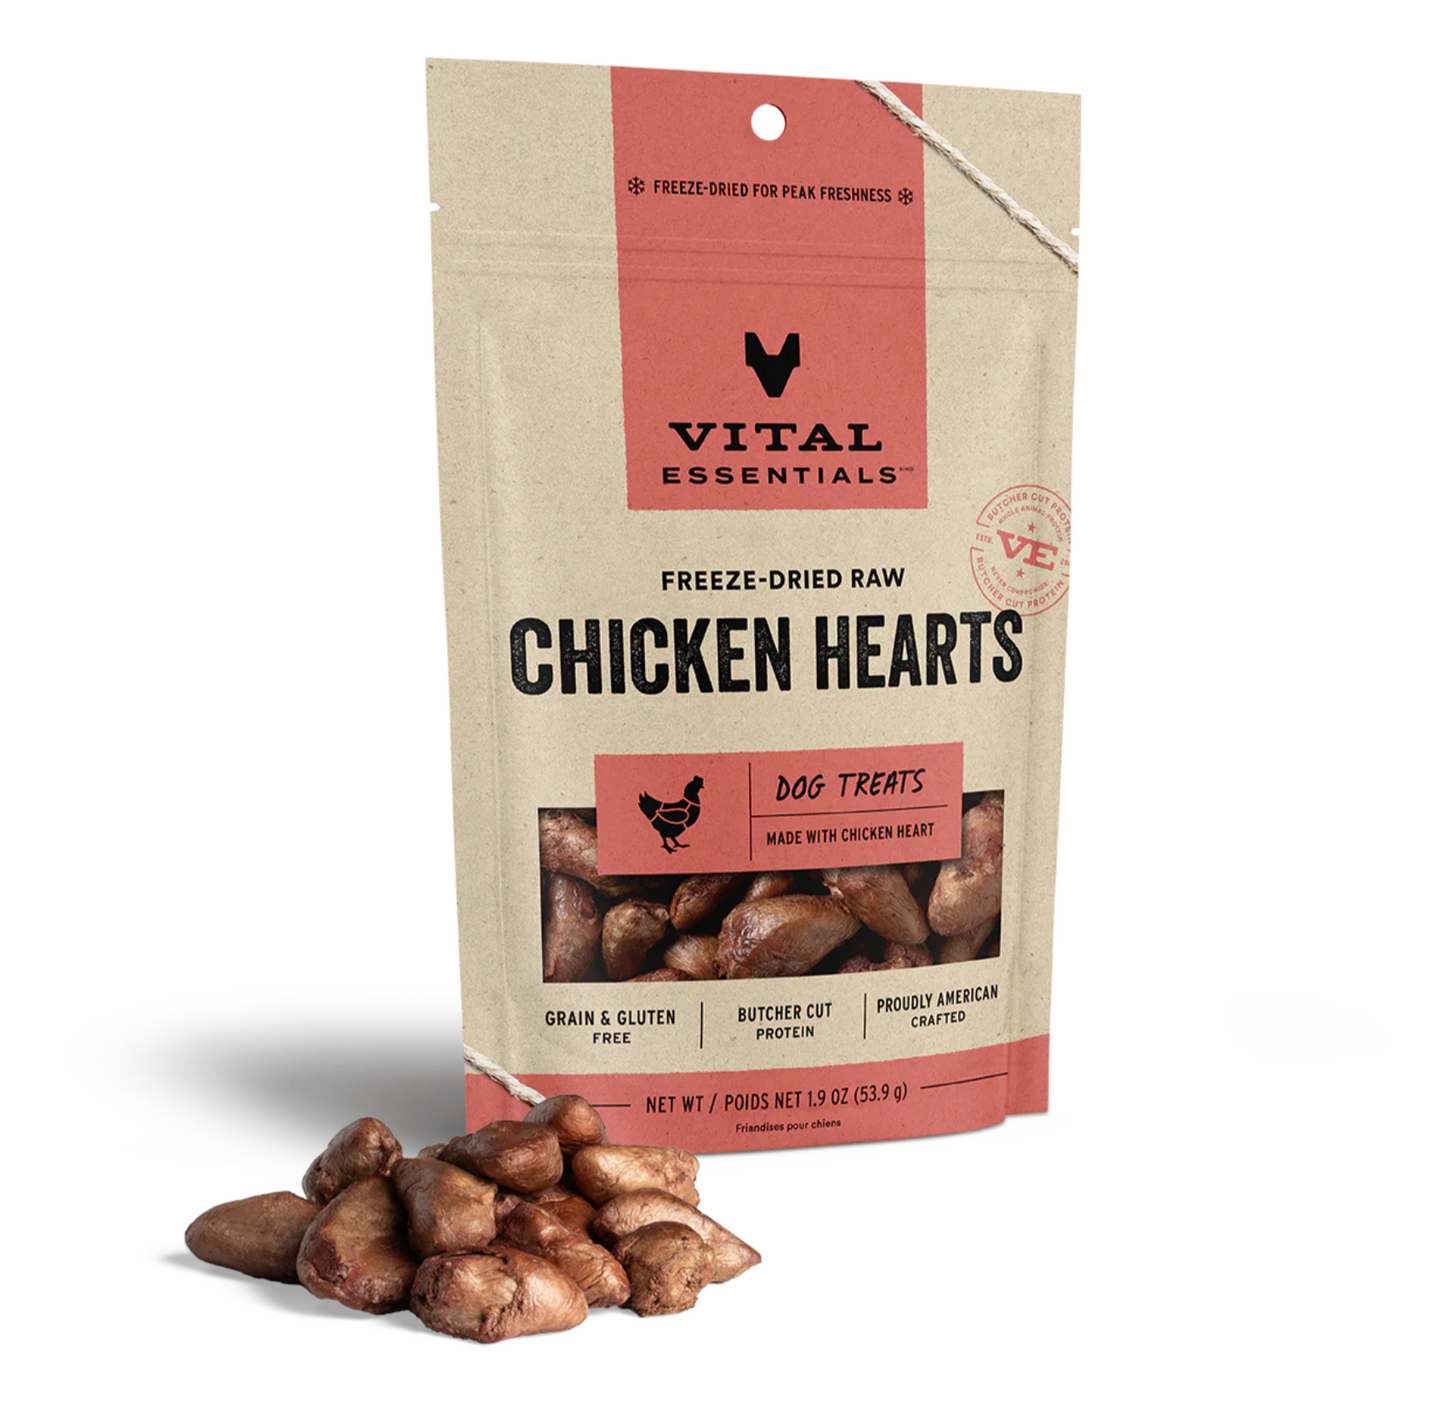 Vital Essentials Chicken Hearts FD Dog Treats 1.9 oz